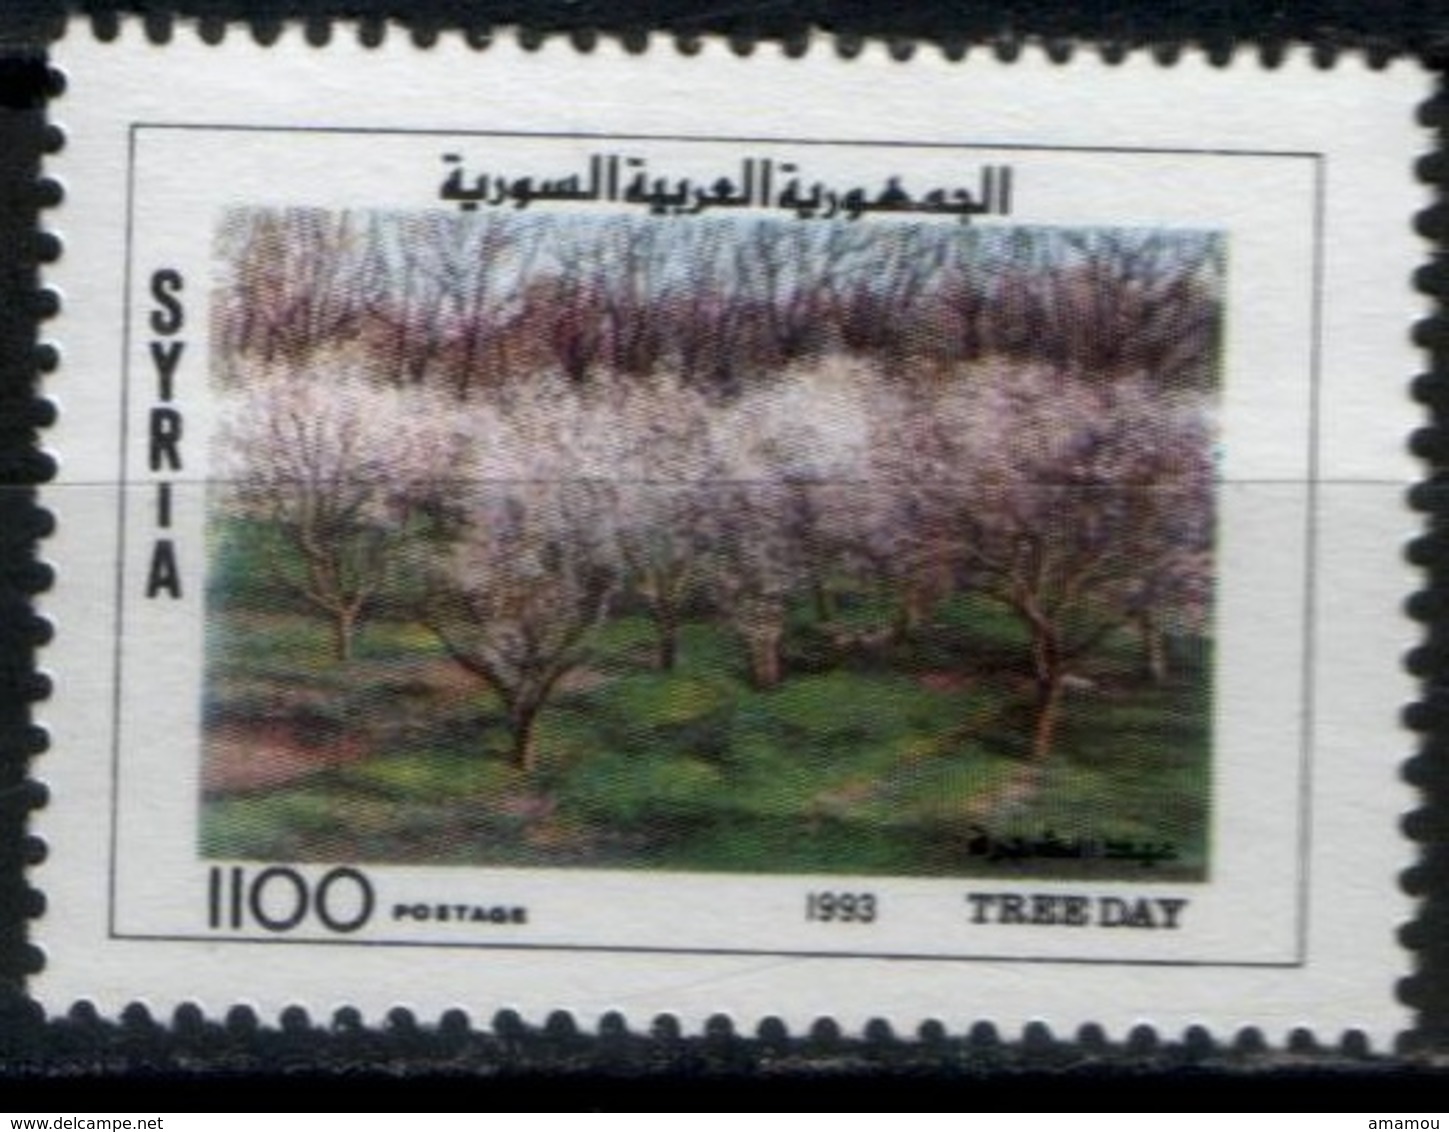 1994-Syria-Tree Day-  MNH** - Siria